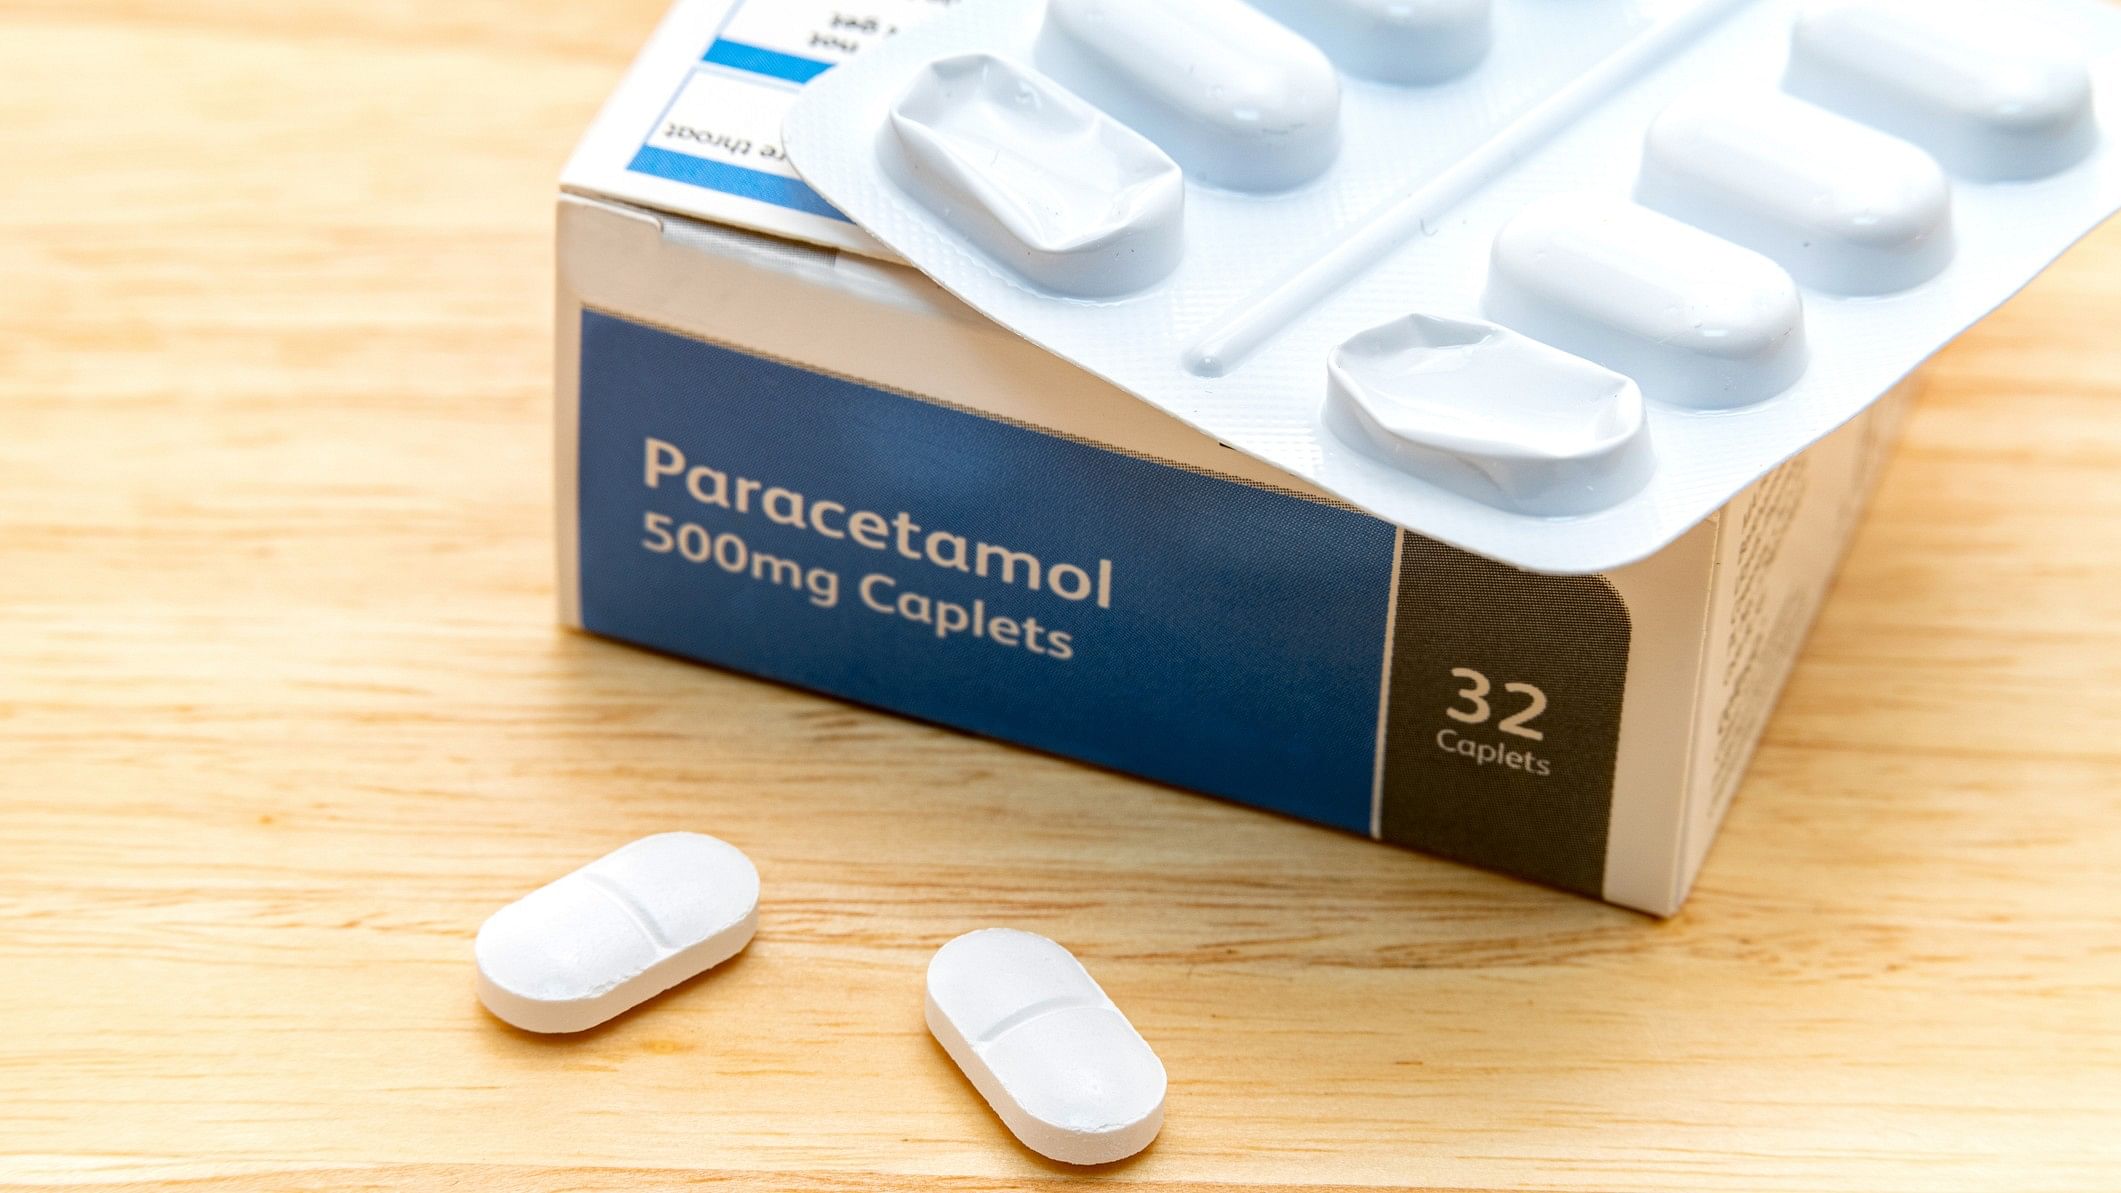 <div class="paragraphs"><p>Representative image of a paracetamol tablet pack.&nbsp;</p></div>